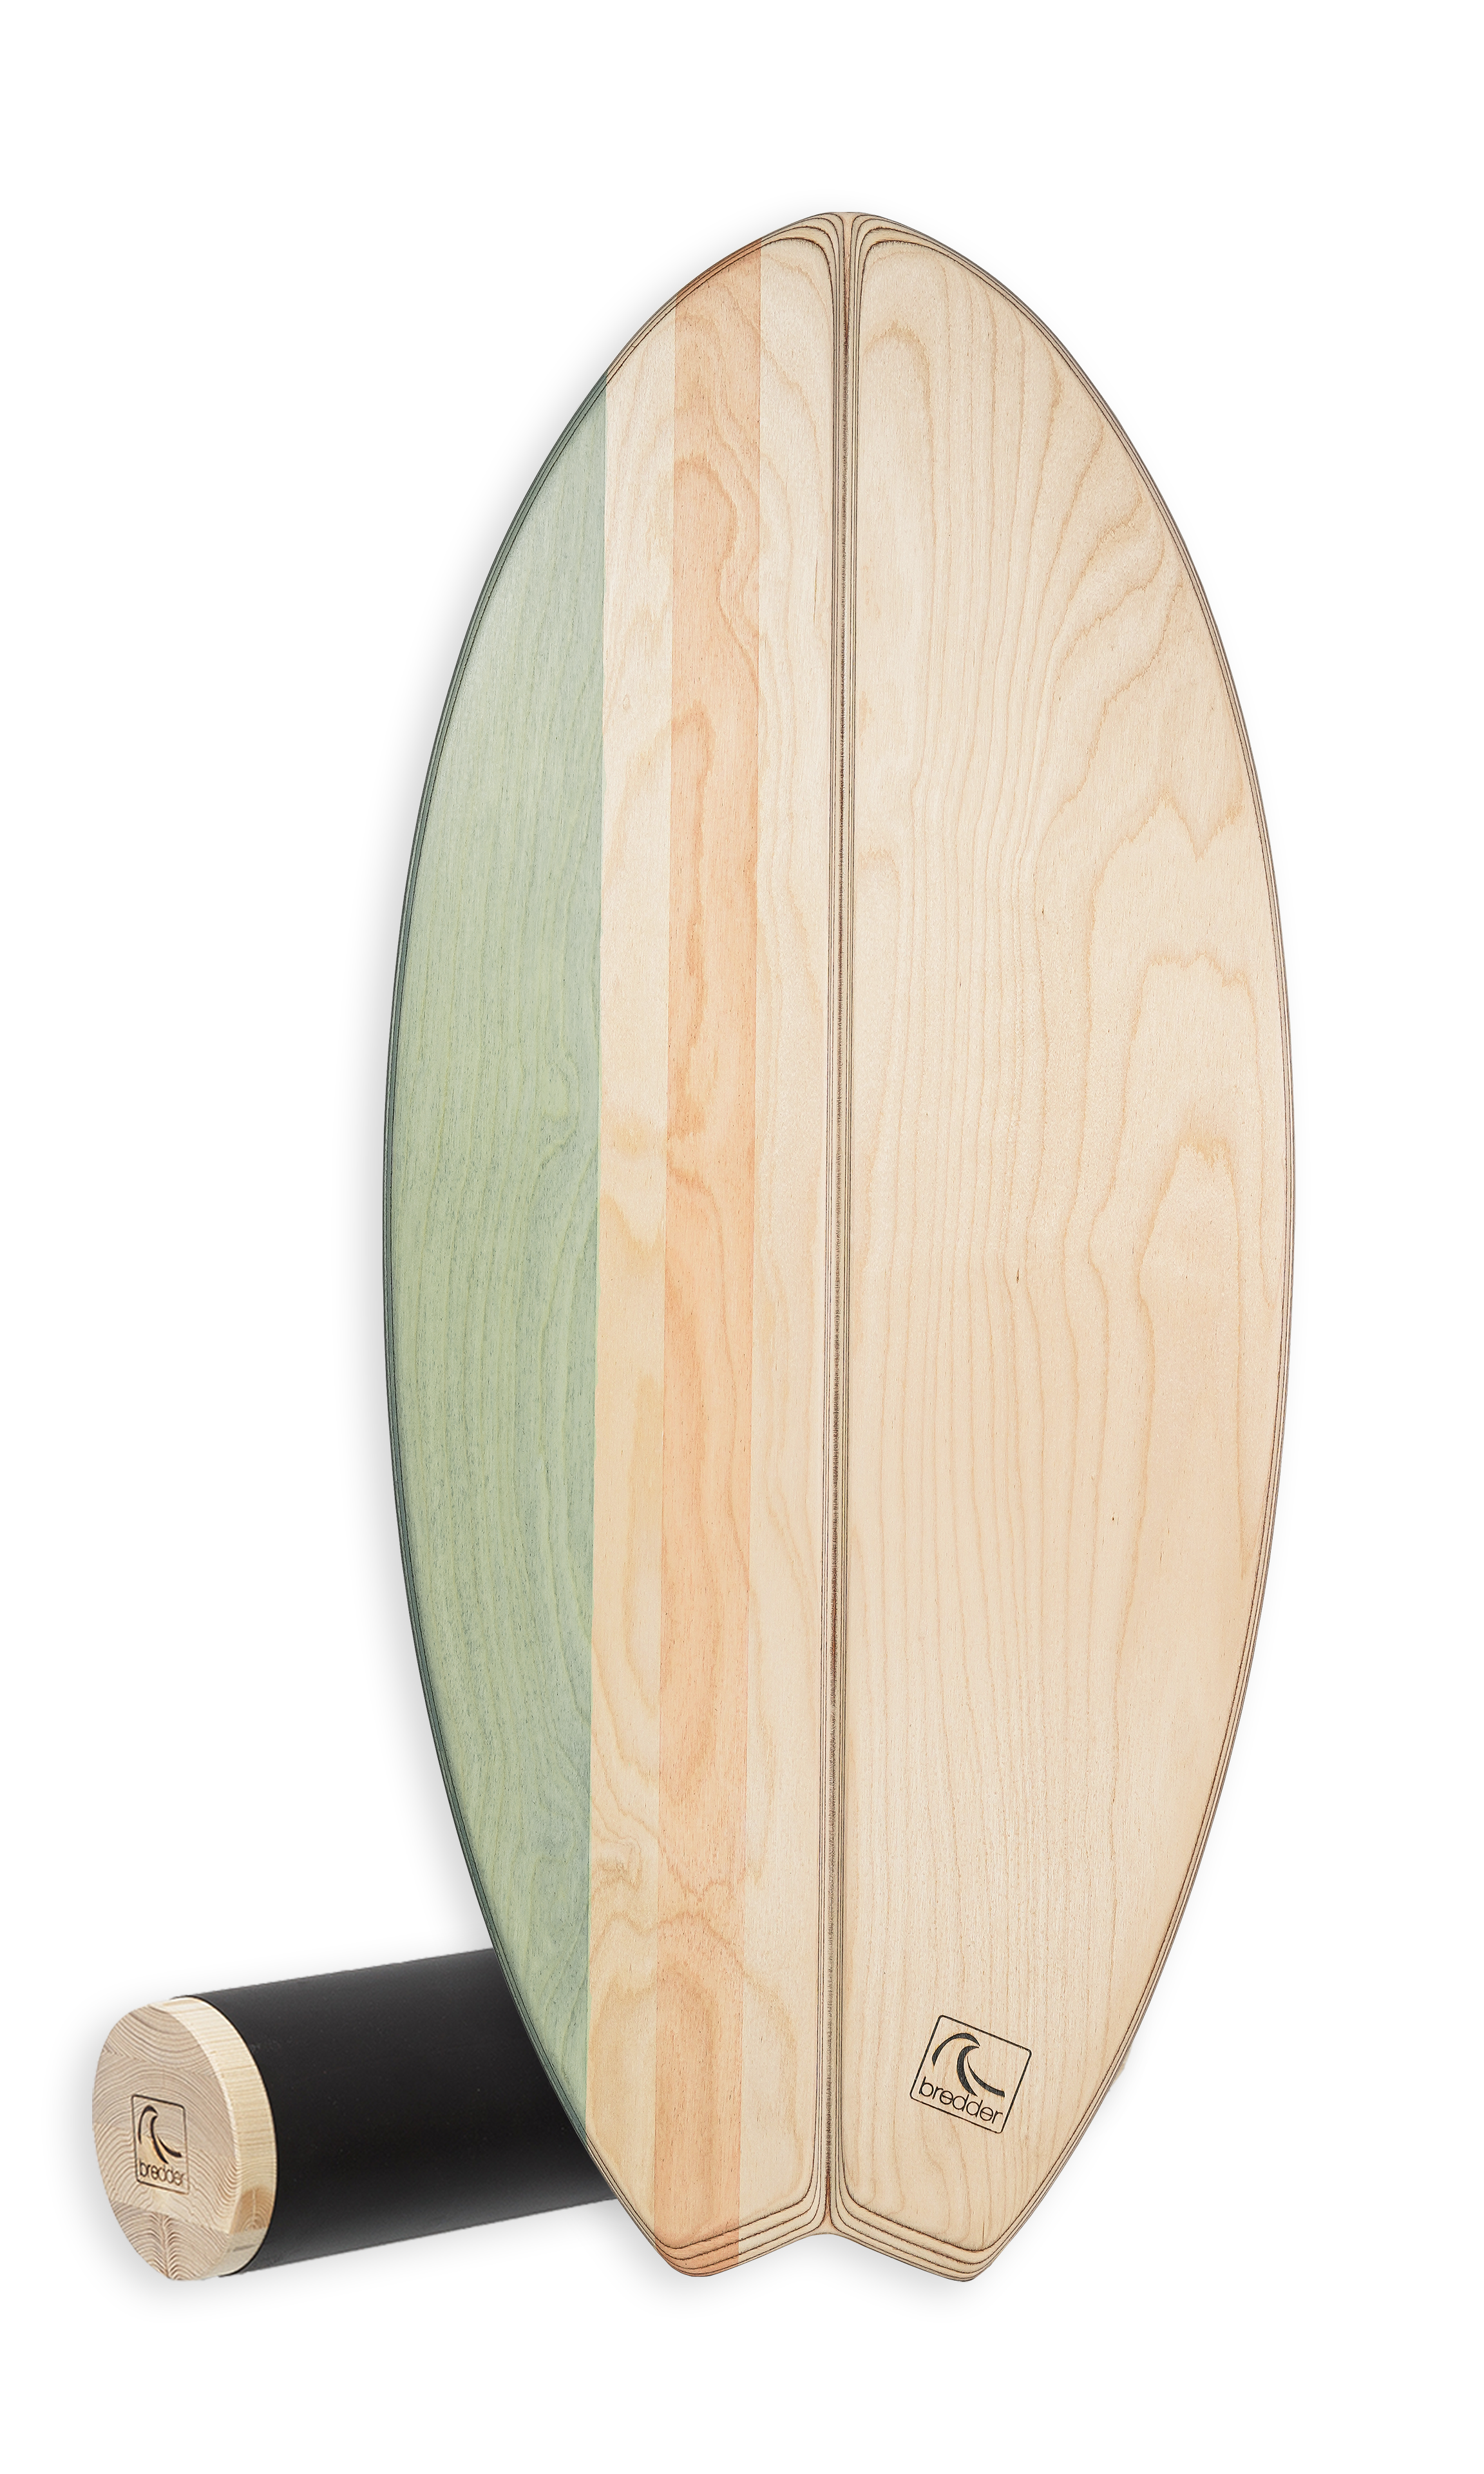 Laluna Fish Balance Board + Solid Wood Roller